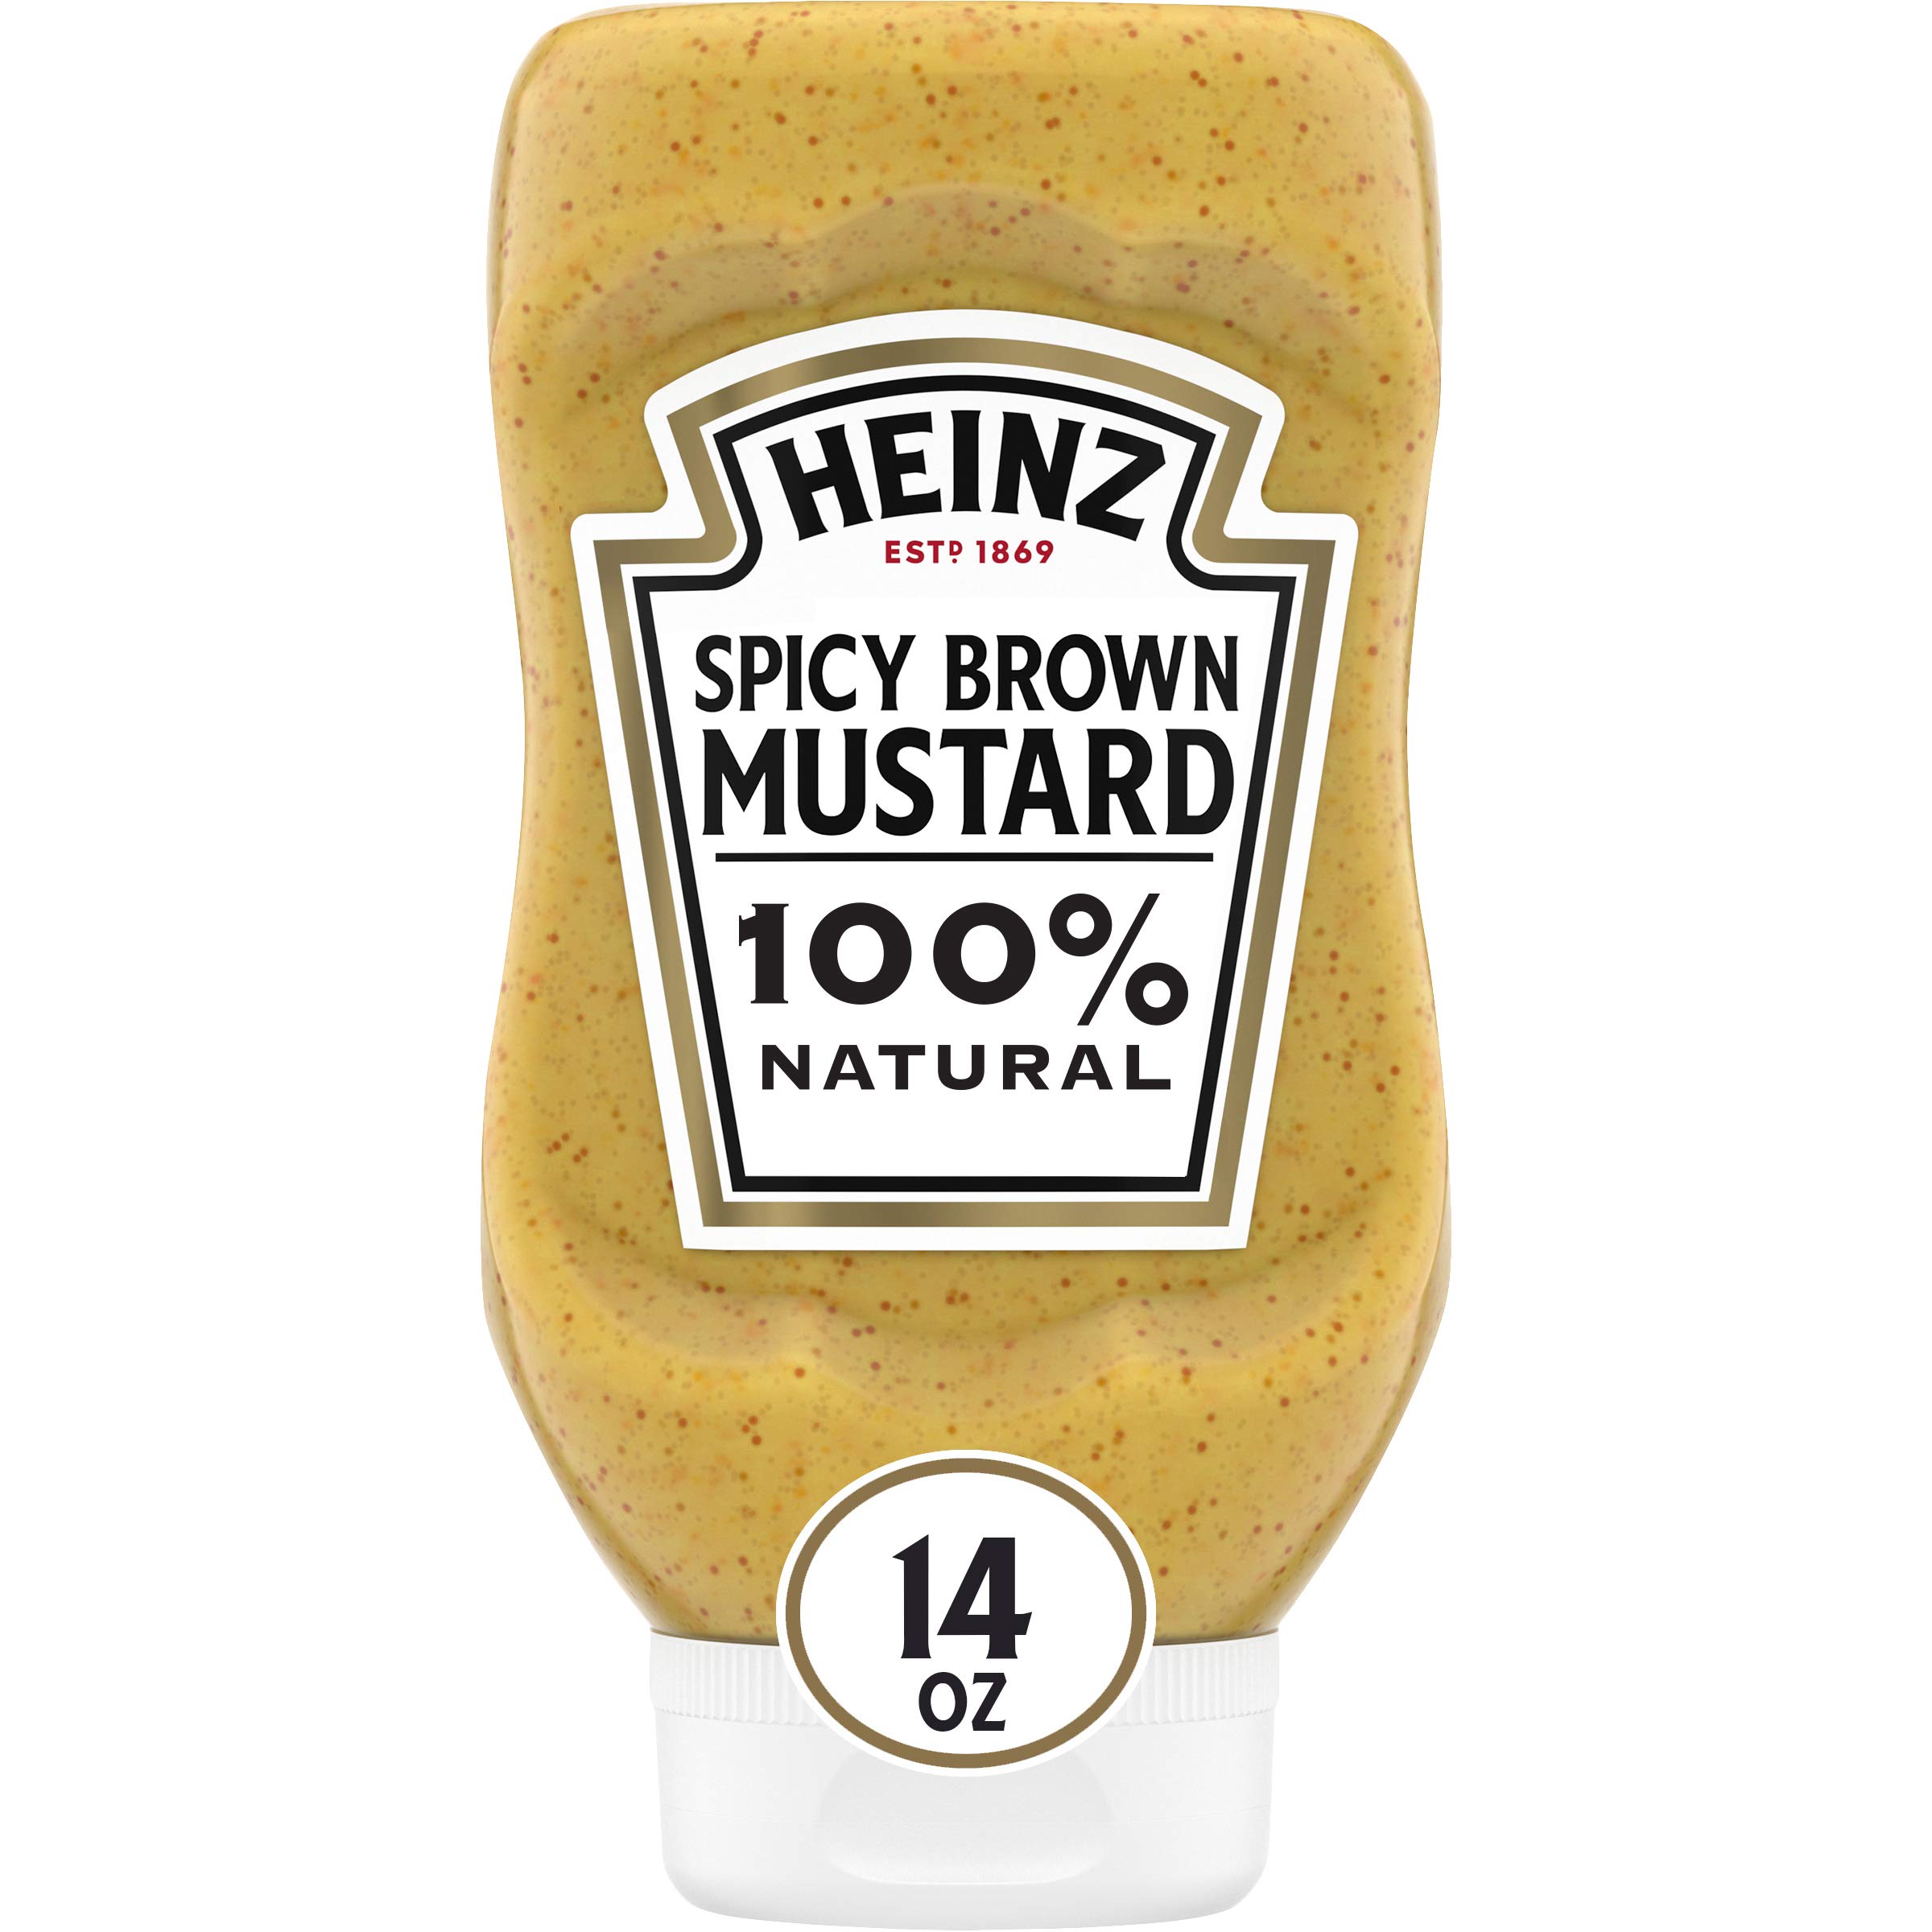 Heinz Spicy Brown Mustard (14 oz Bottles, Pack of 6)